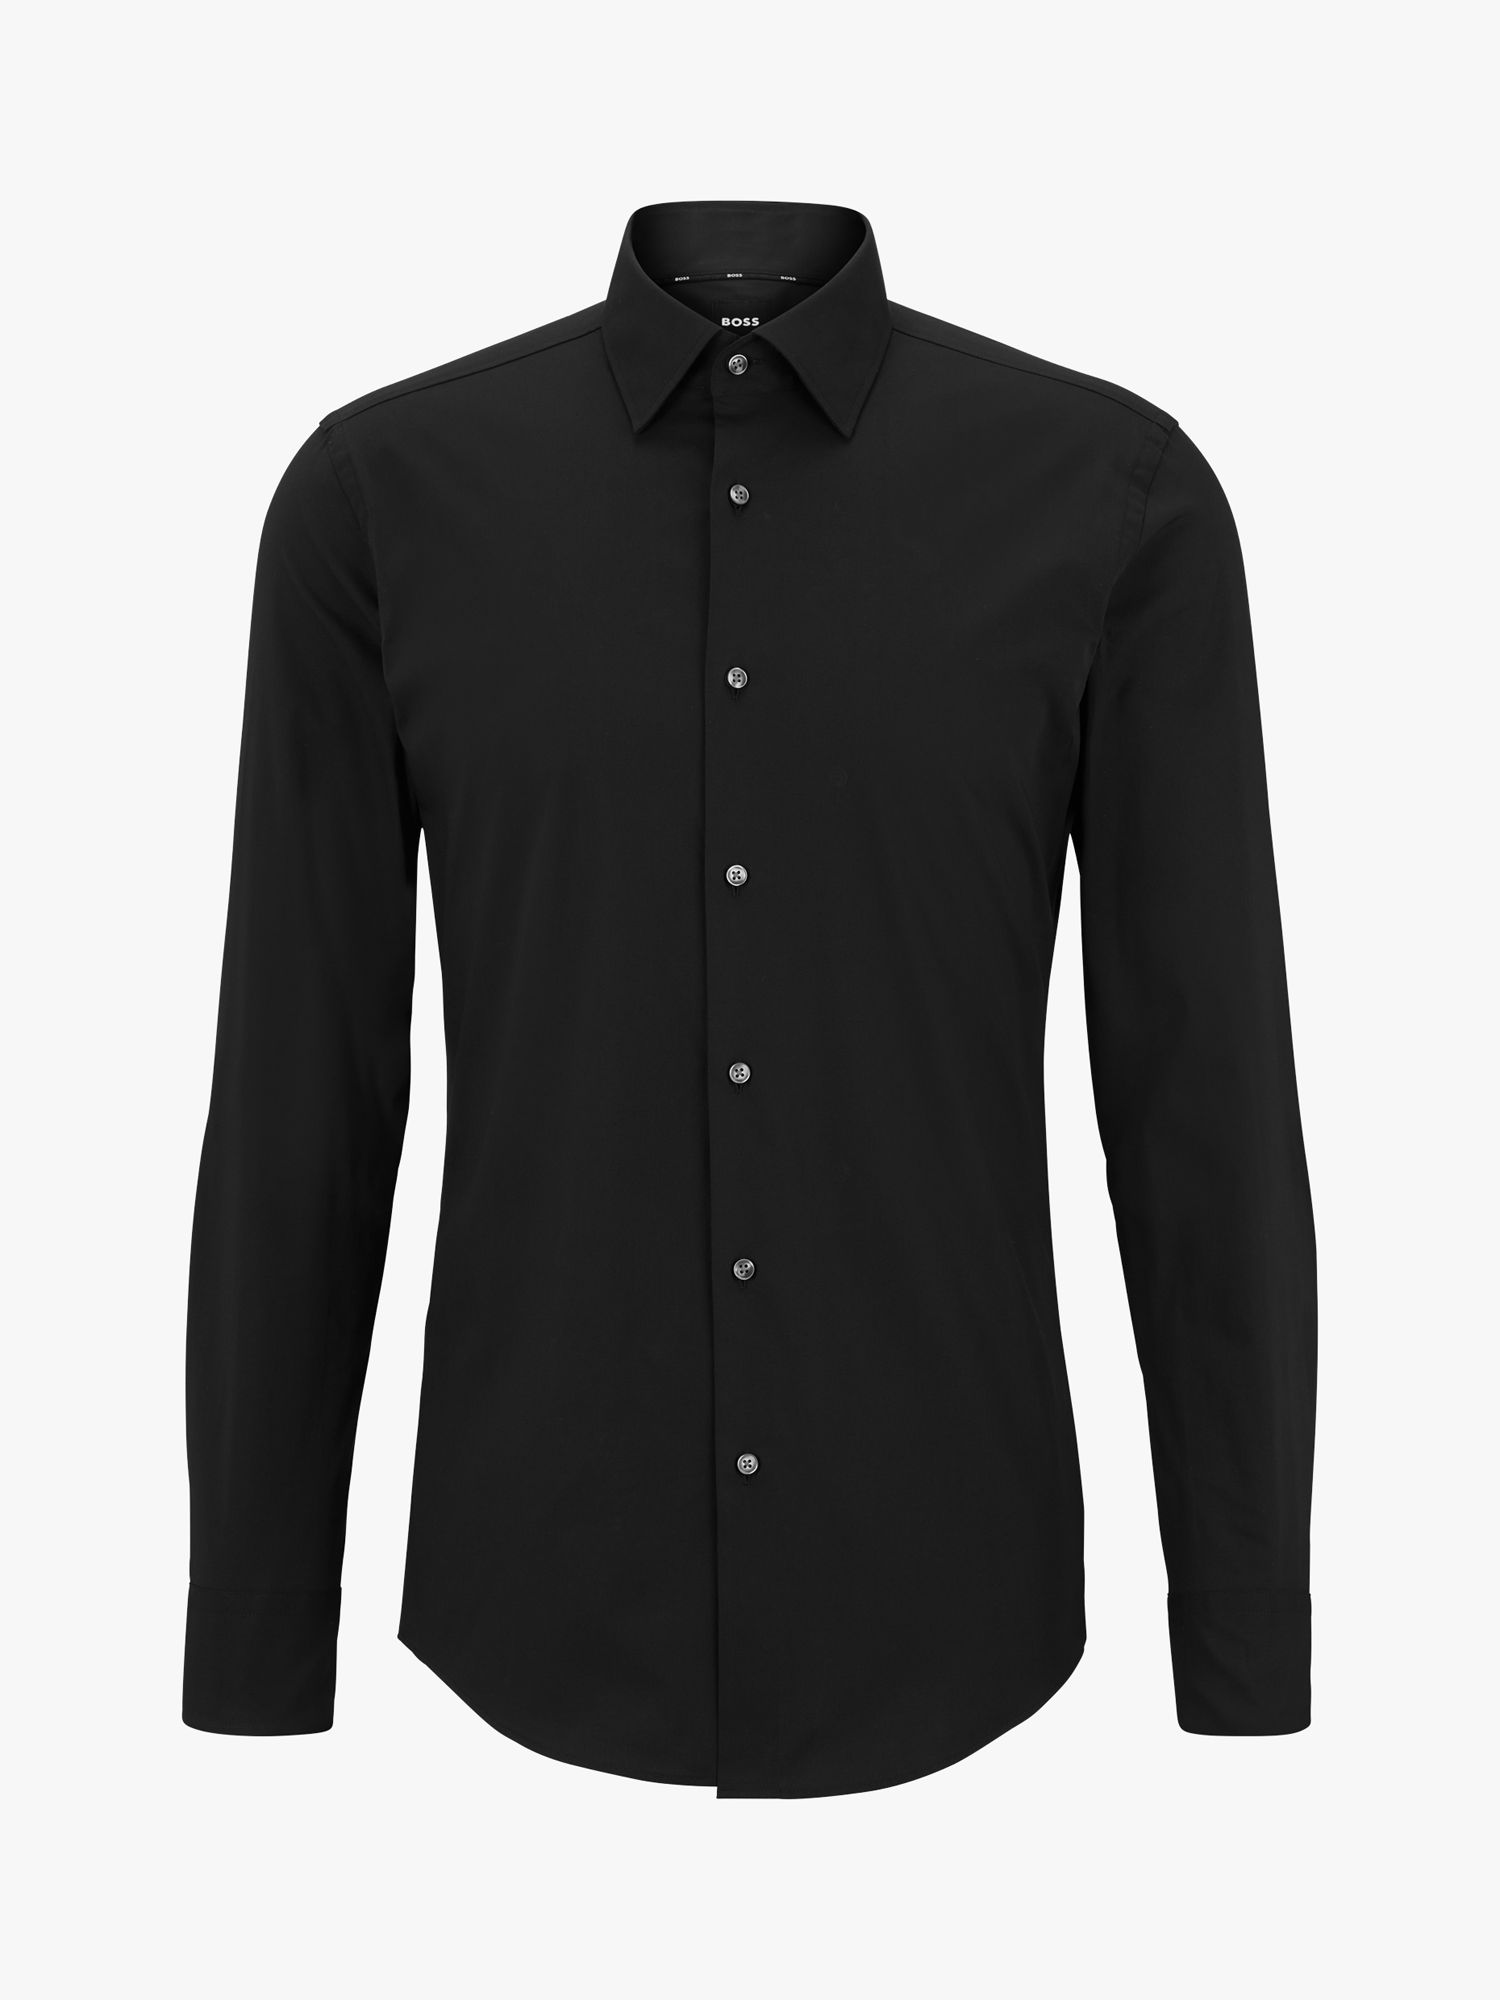 BOSS Hank Kent Slim Fit Shirt, Black at John Lewis & Partners